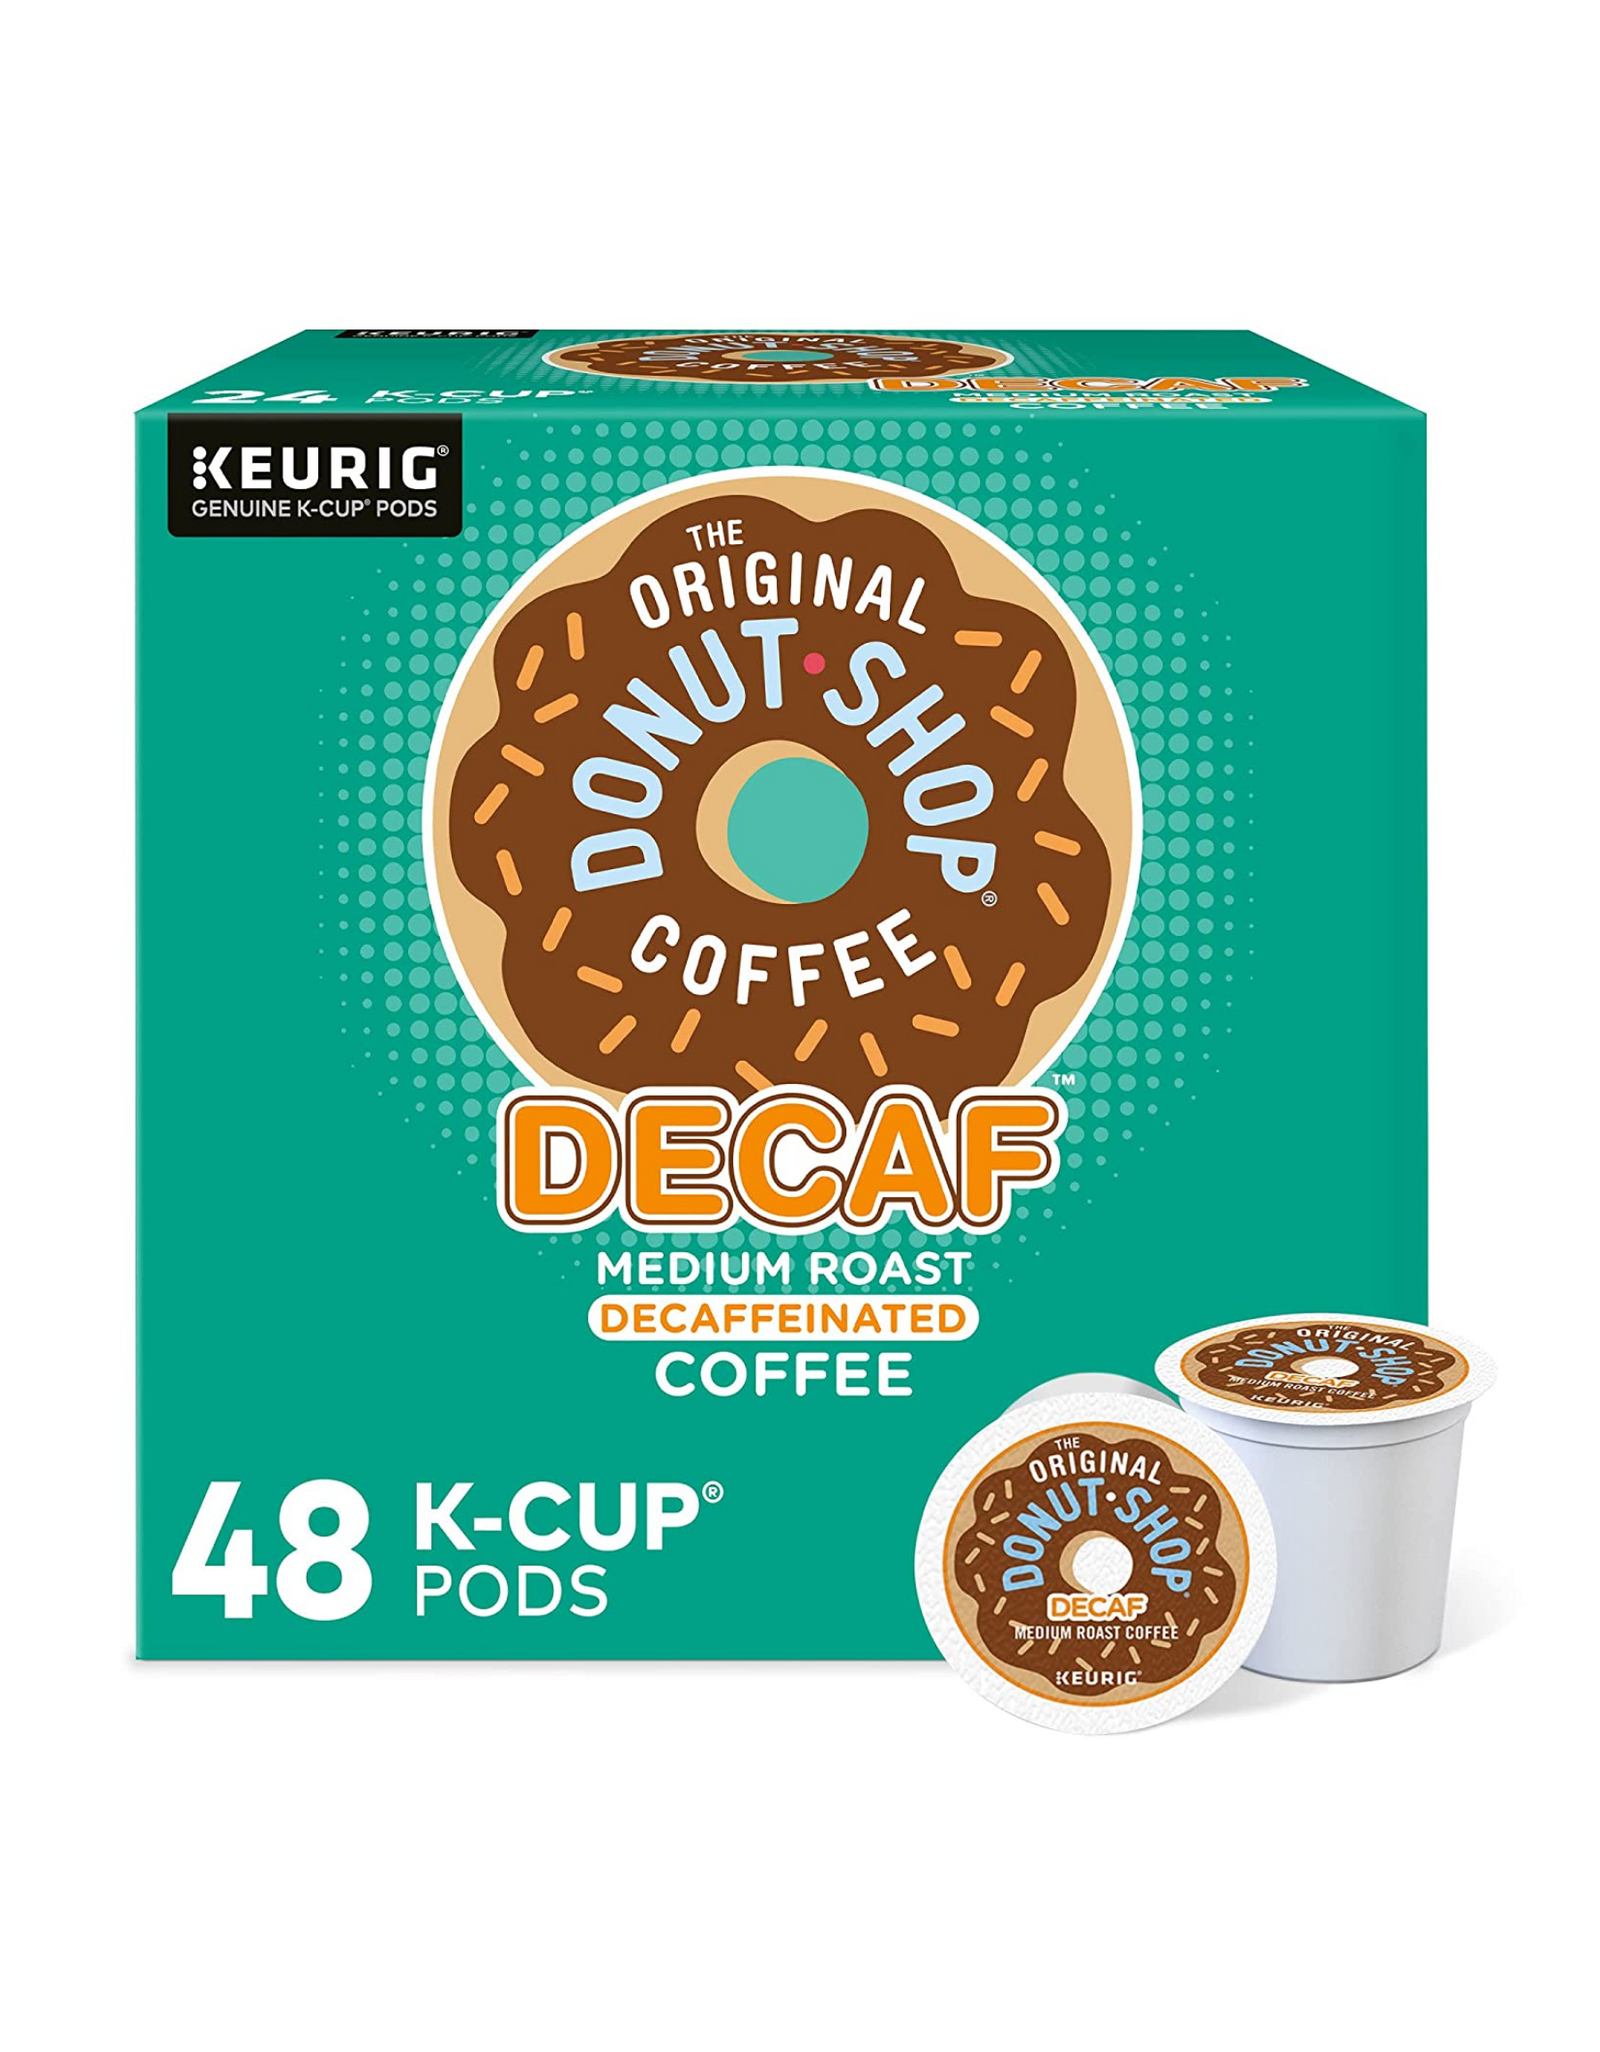 The Original Donut Shop Decaf K-Cup Pods, Medium Roast Coffee, 48 Count